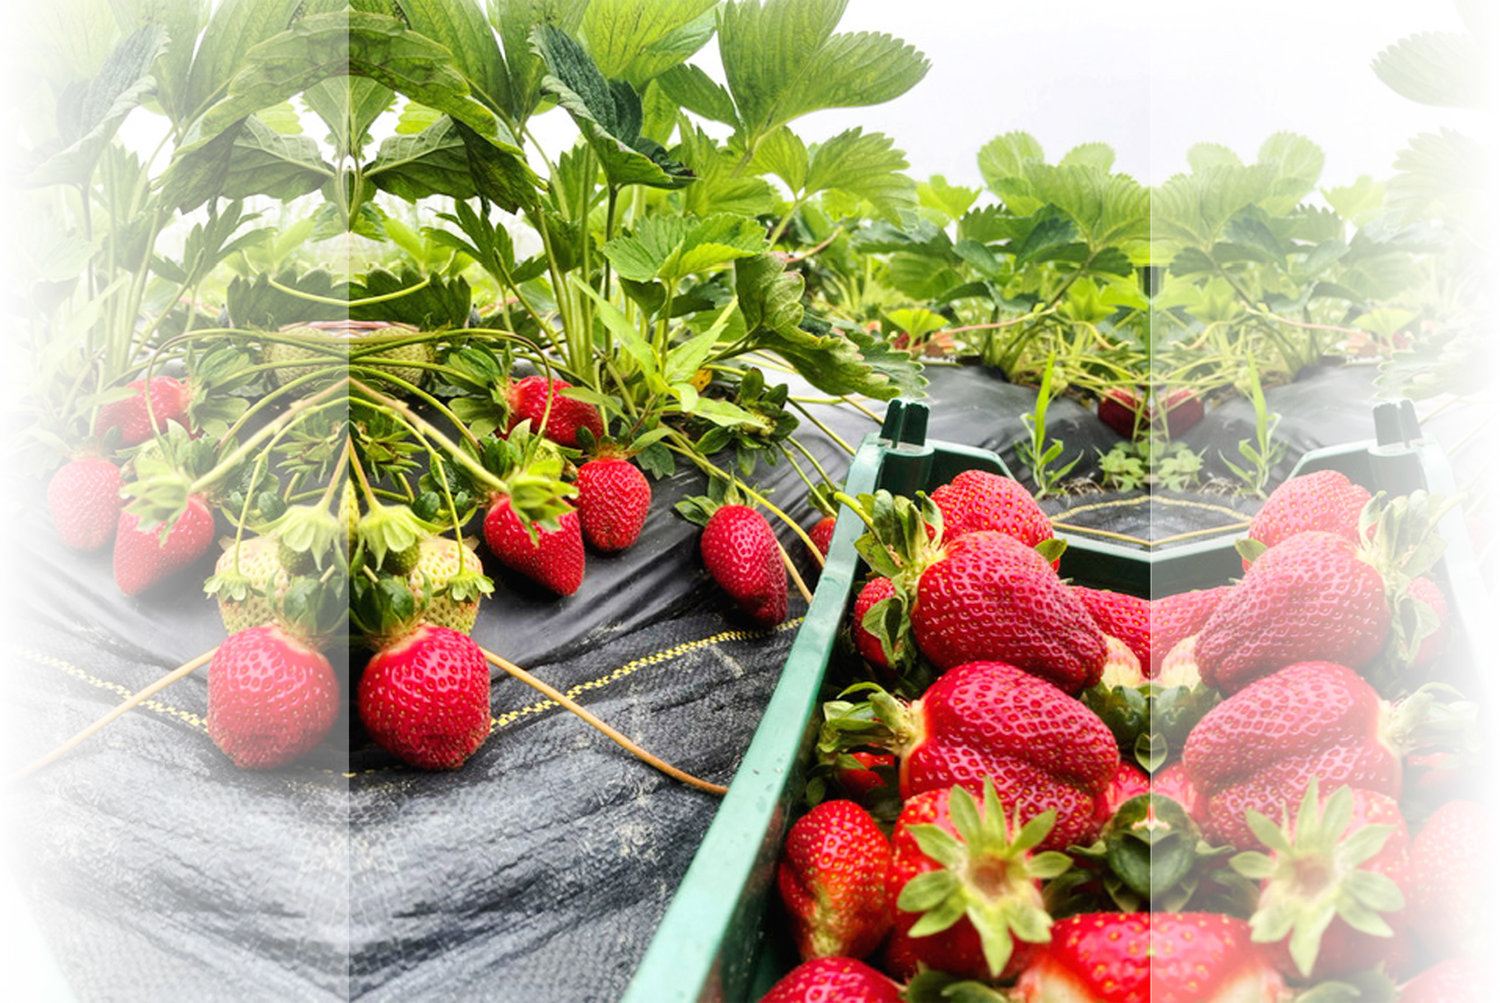 Fresh strawberries grown on Wishing Stone Farm